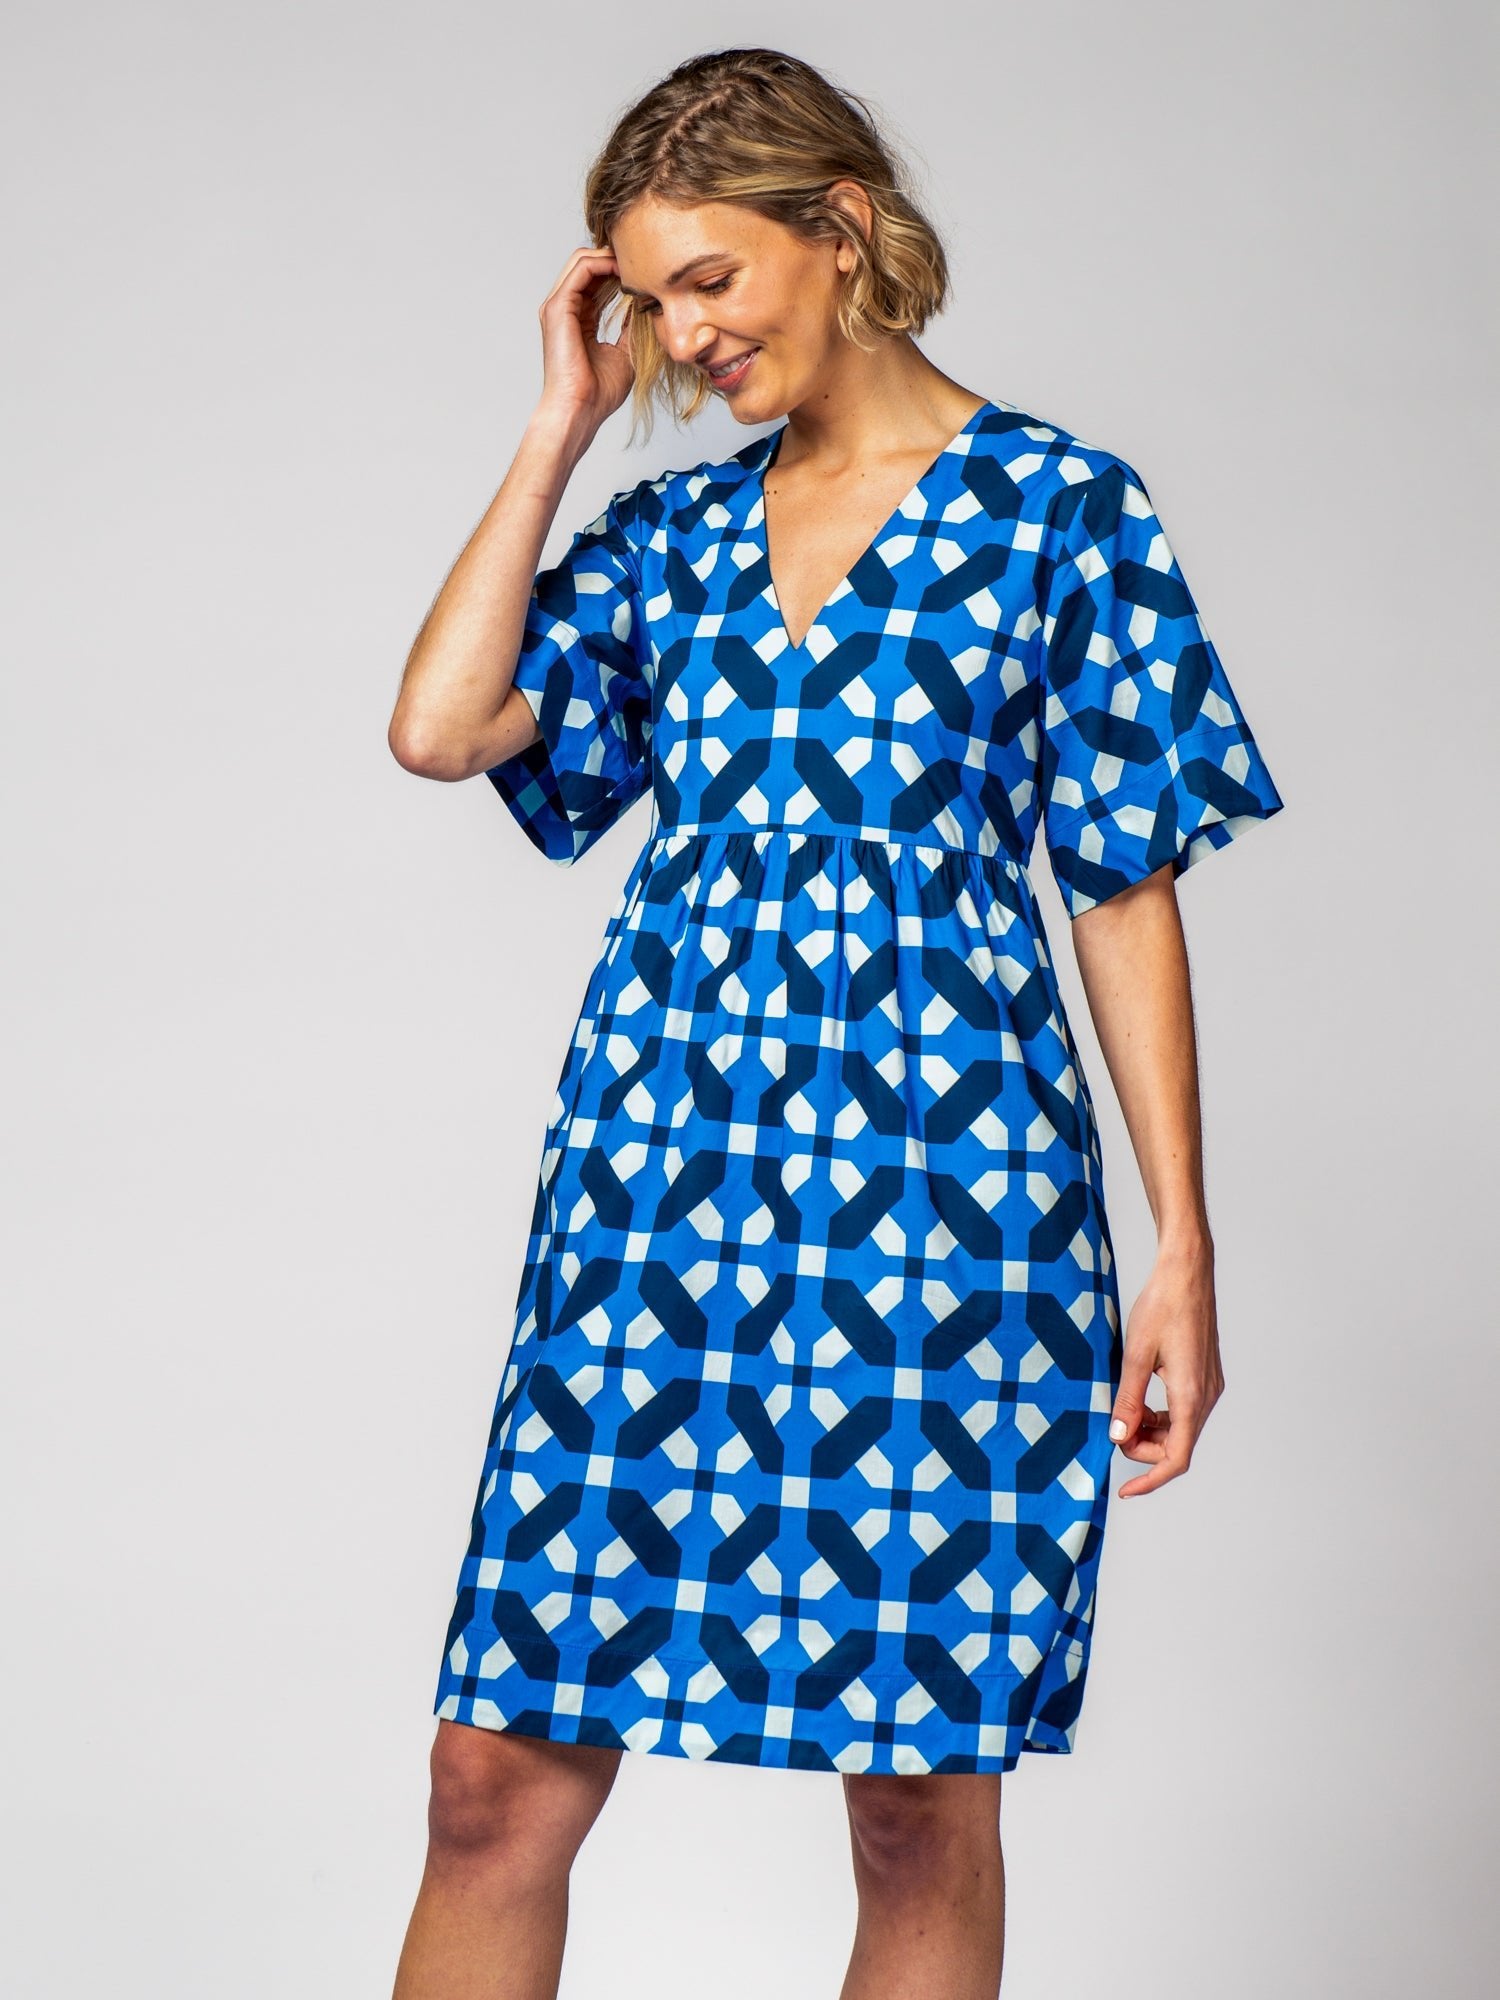 CARA dress Trellis Blue - Lesley Evers-Dress-Shop-Shop/All Products